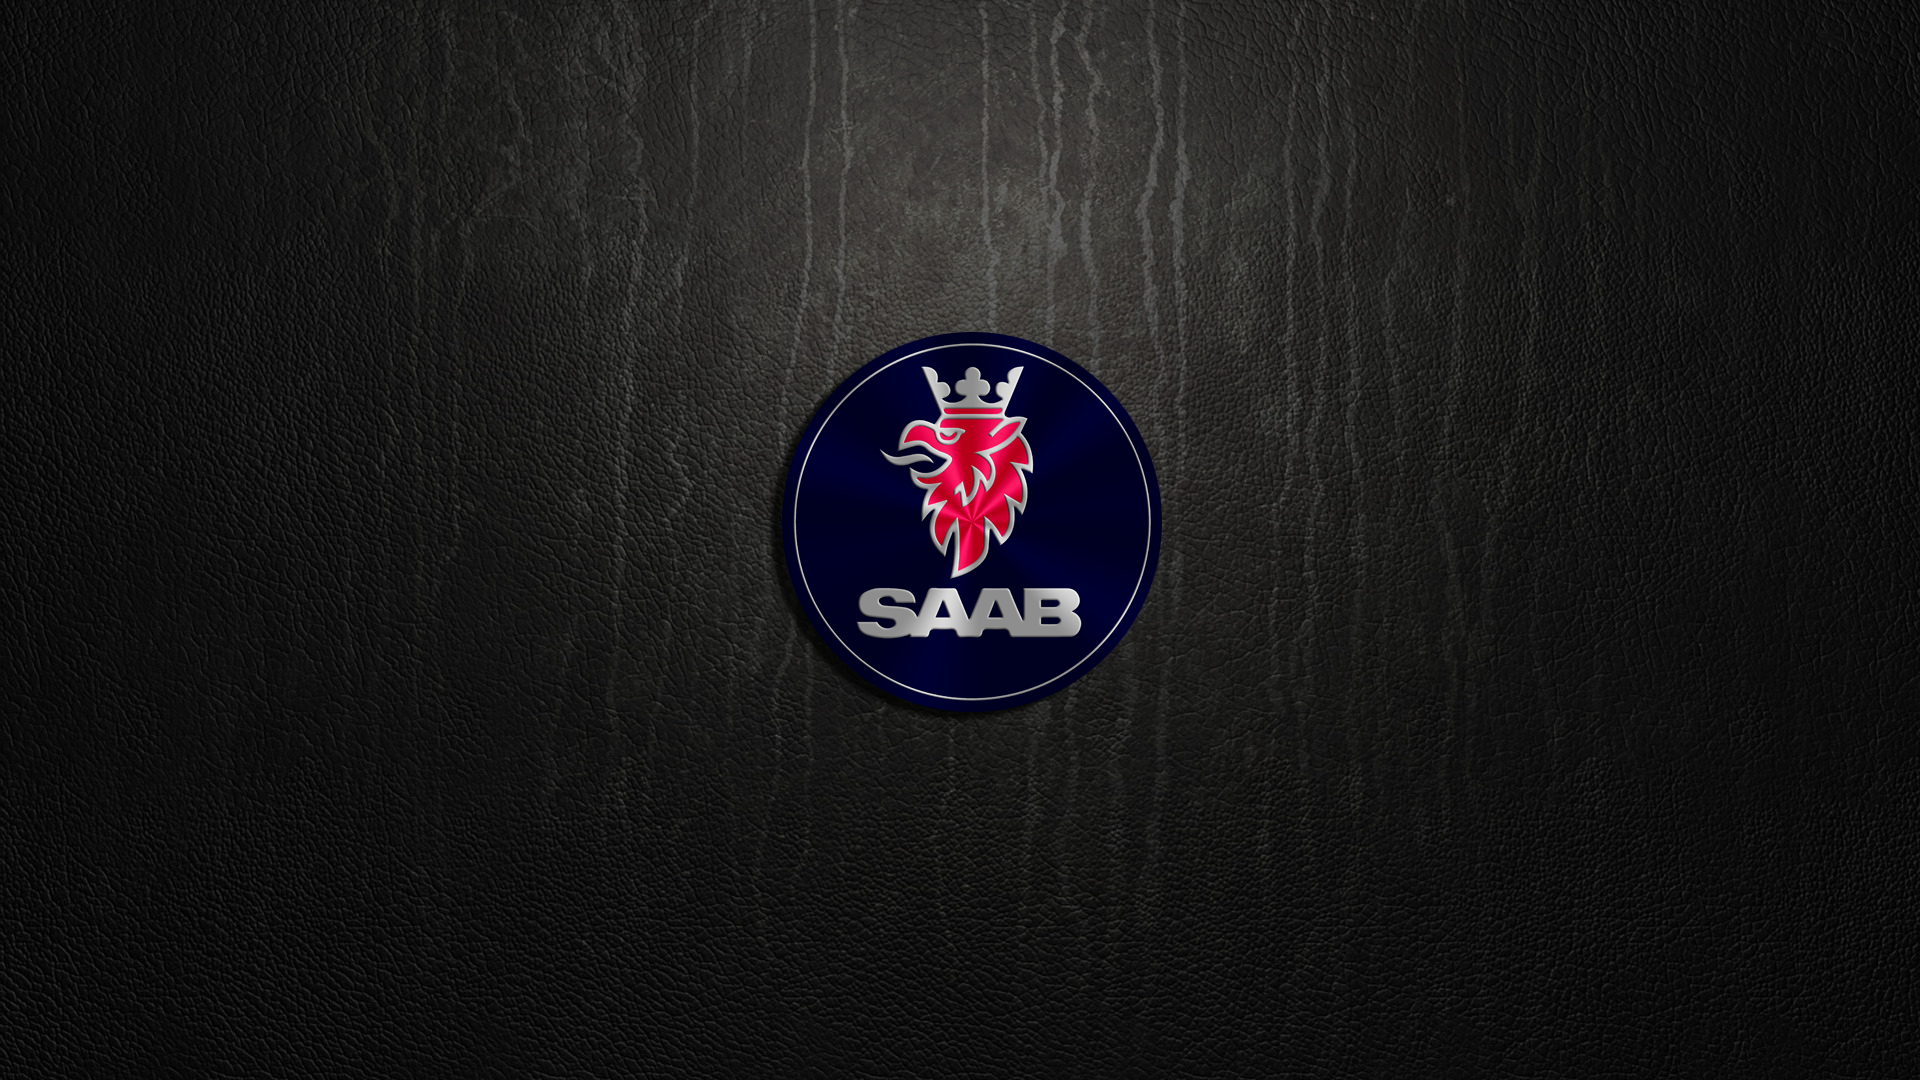 Saab HD Wallpaper Background Image Id